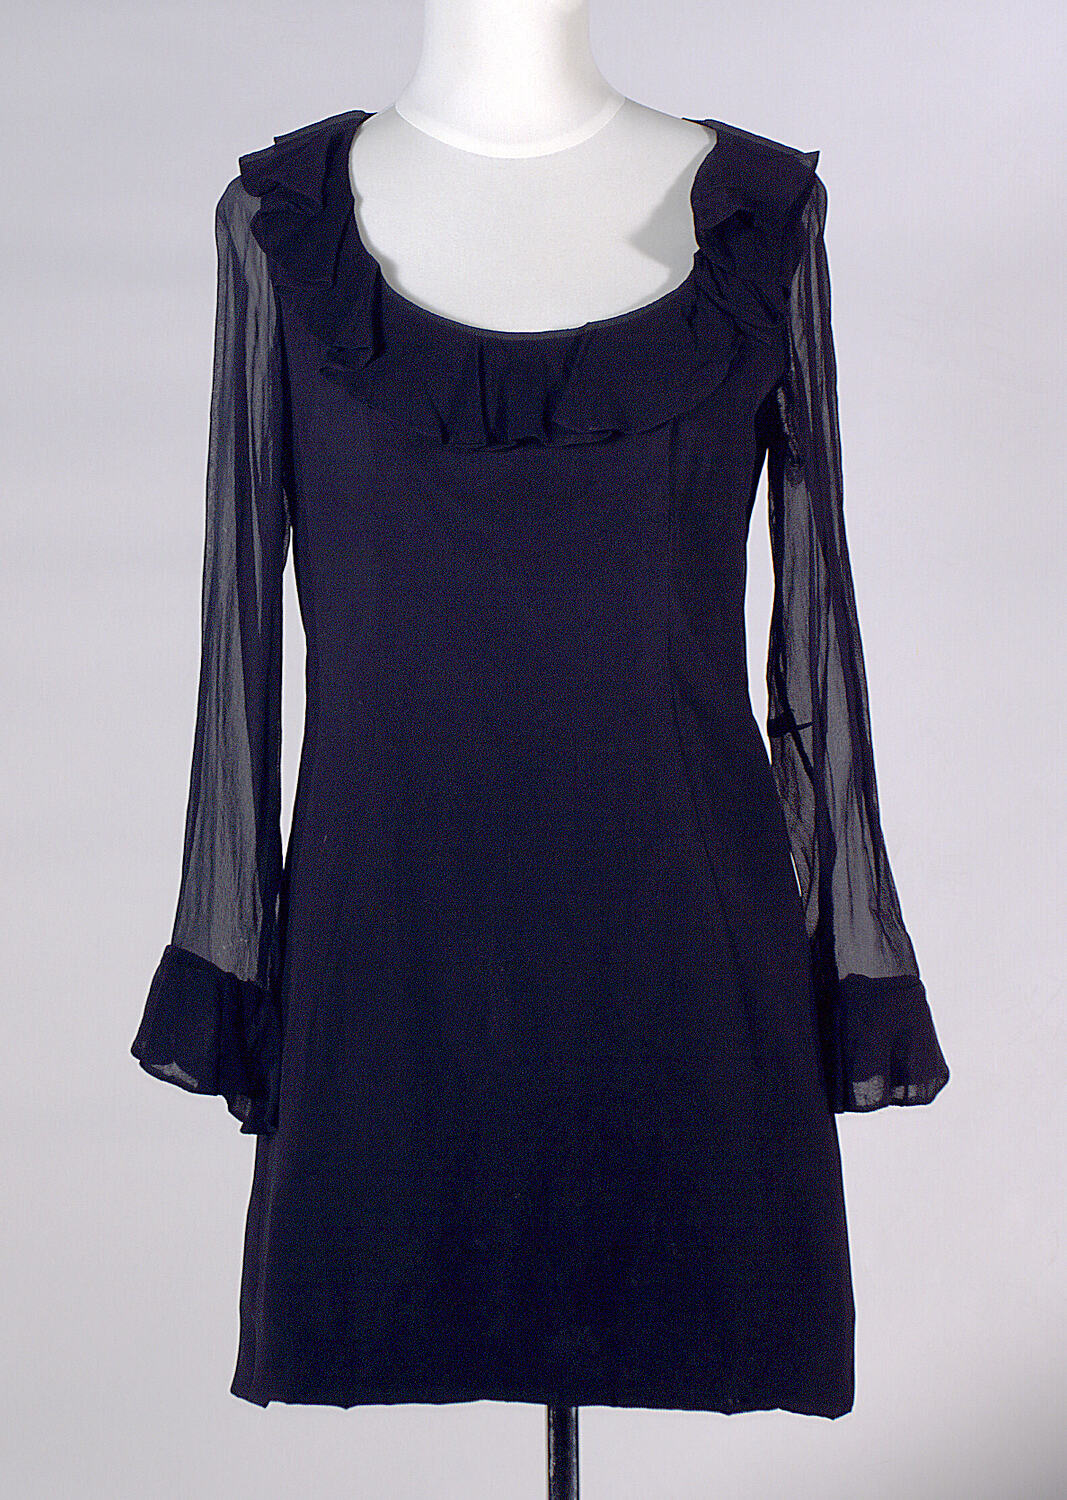 Dress - Prue Acton, Evening Mini, Black Rayon, circa 1965